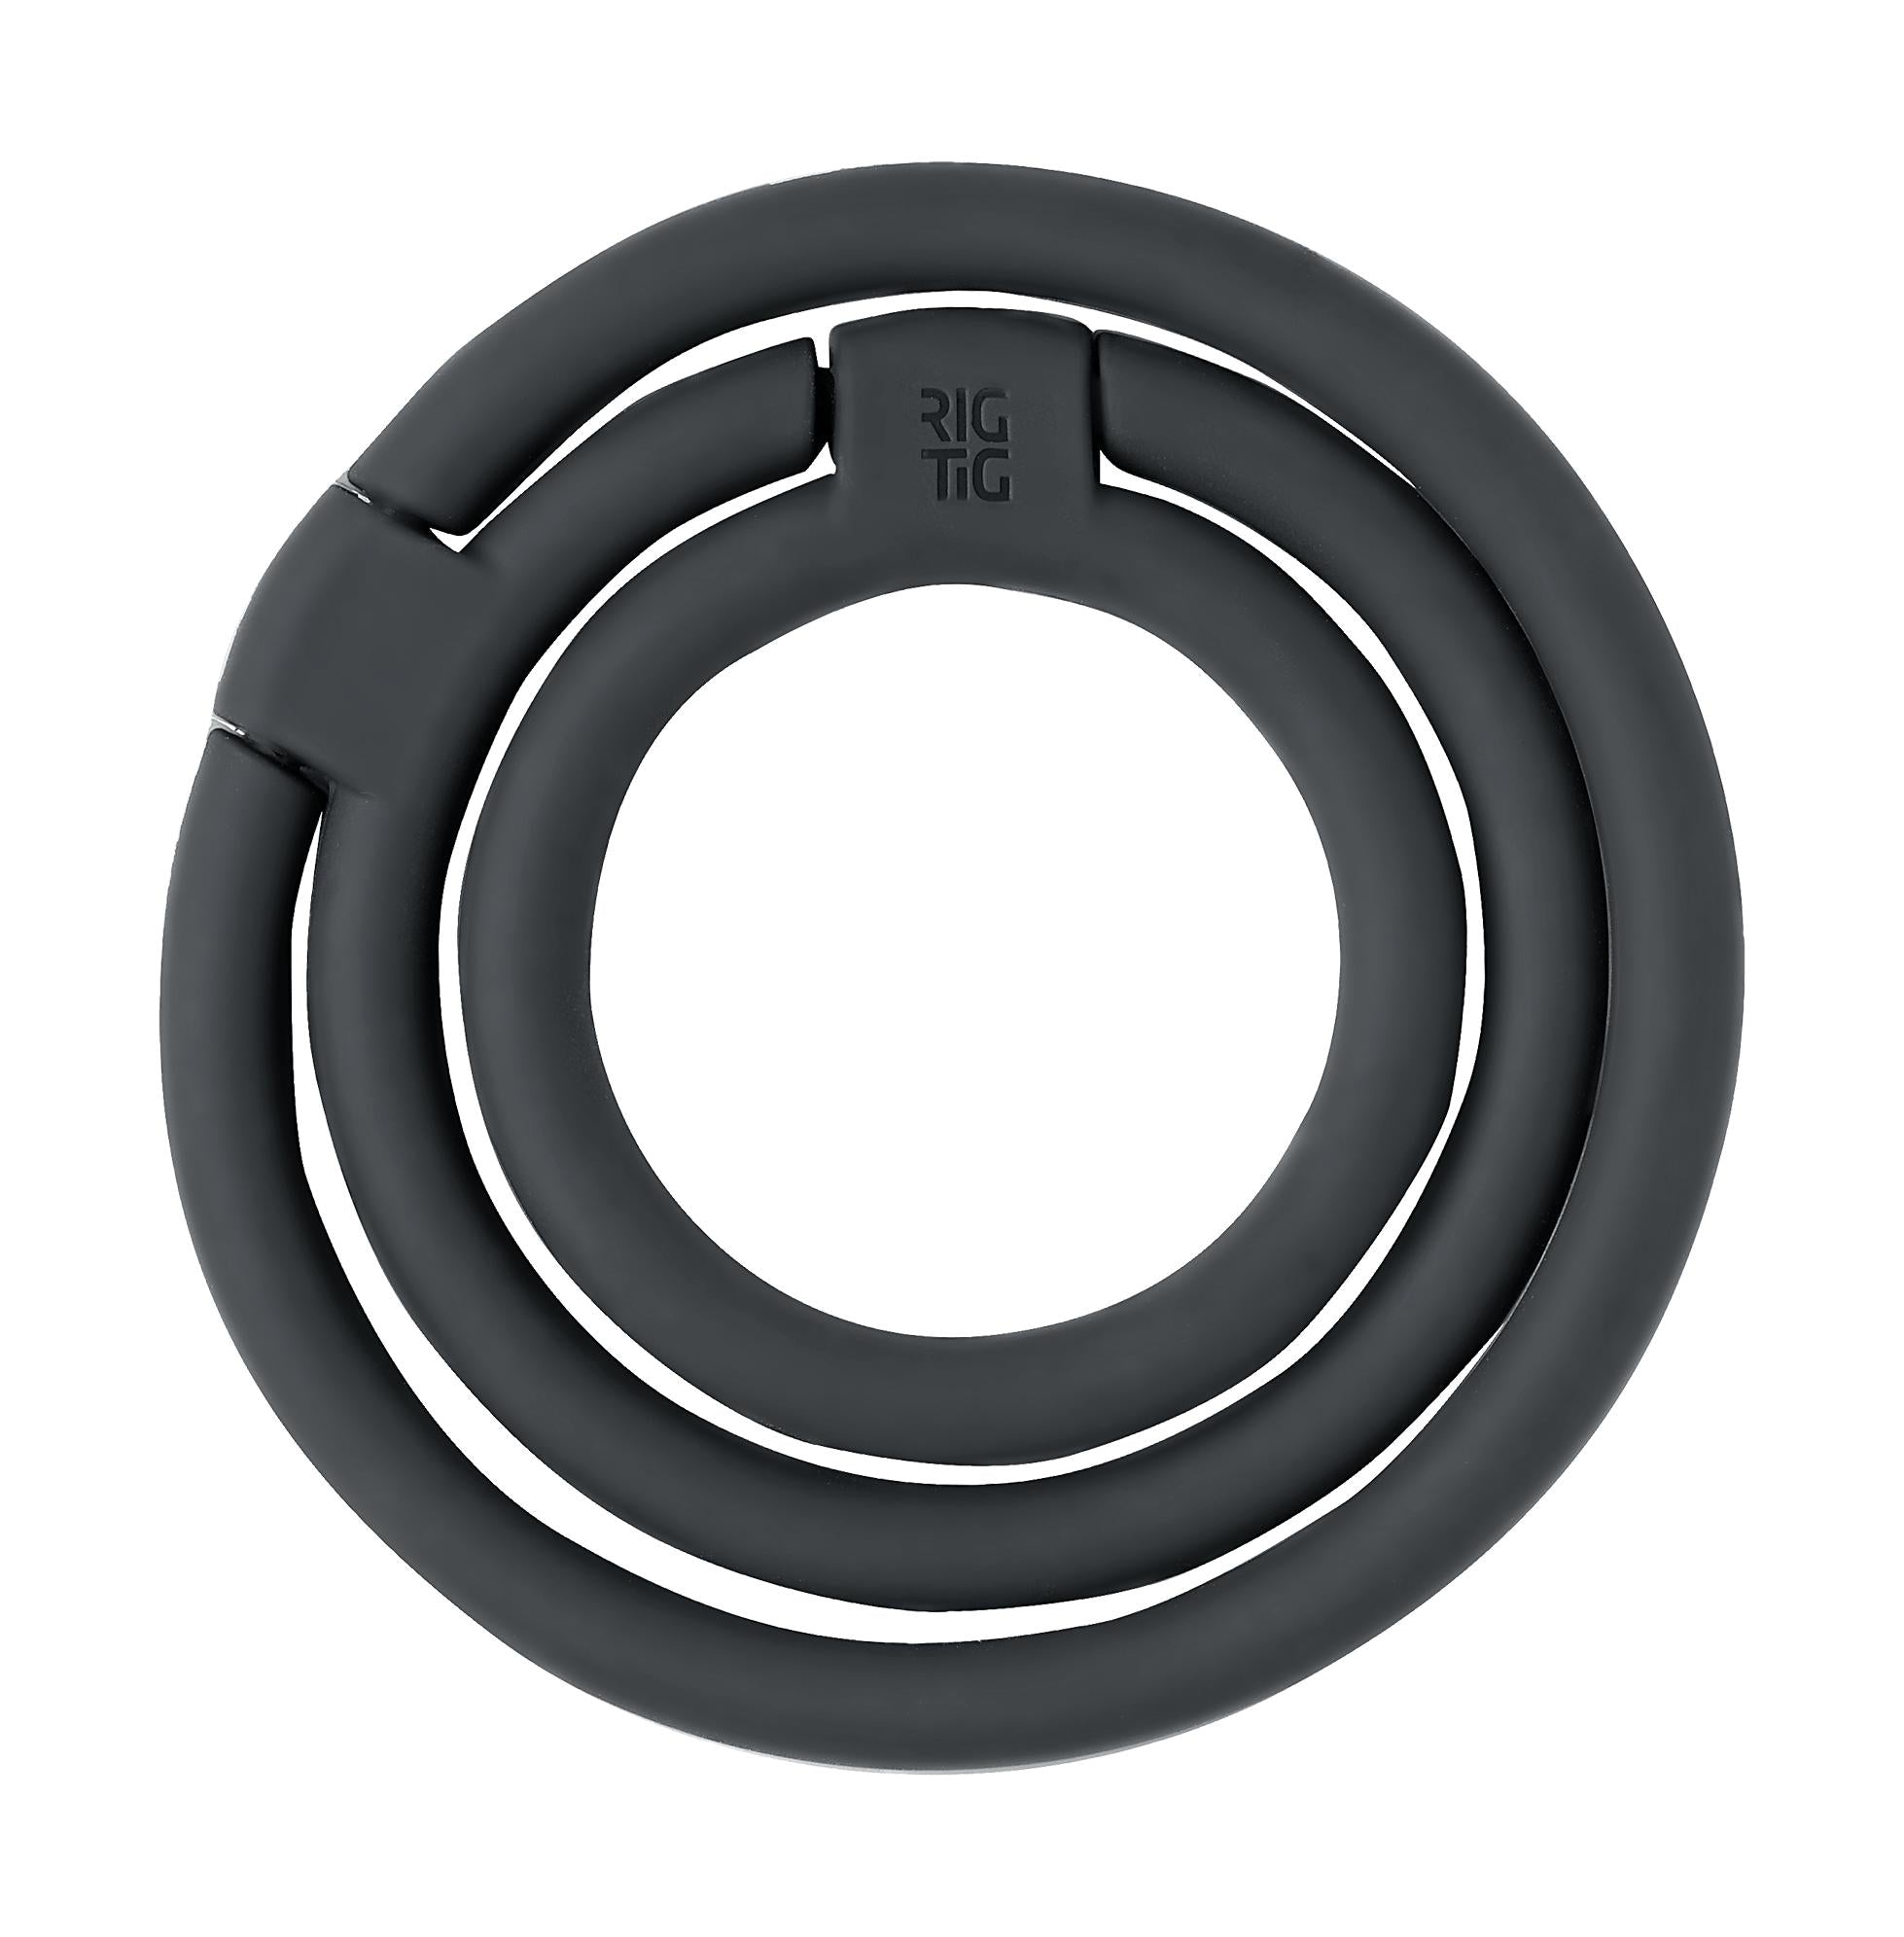 Rig Tig Circles Coaster, Black